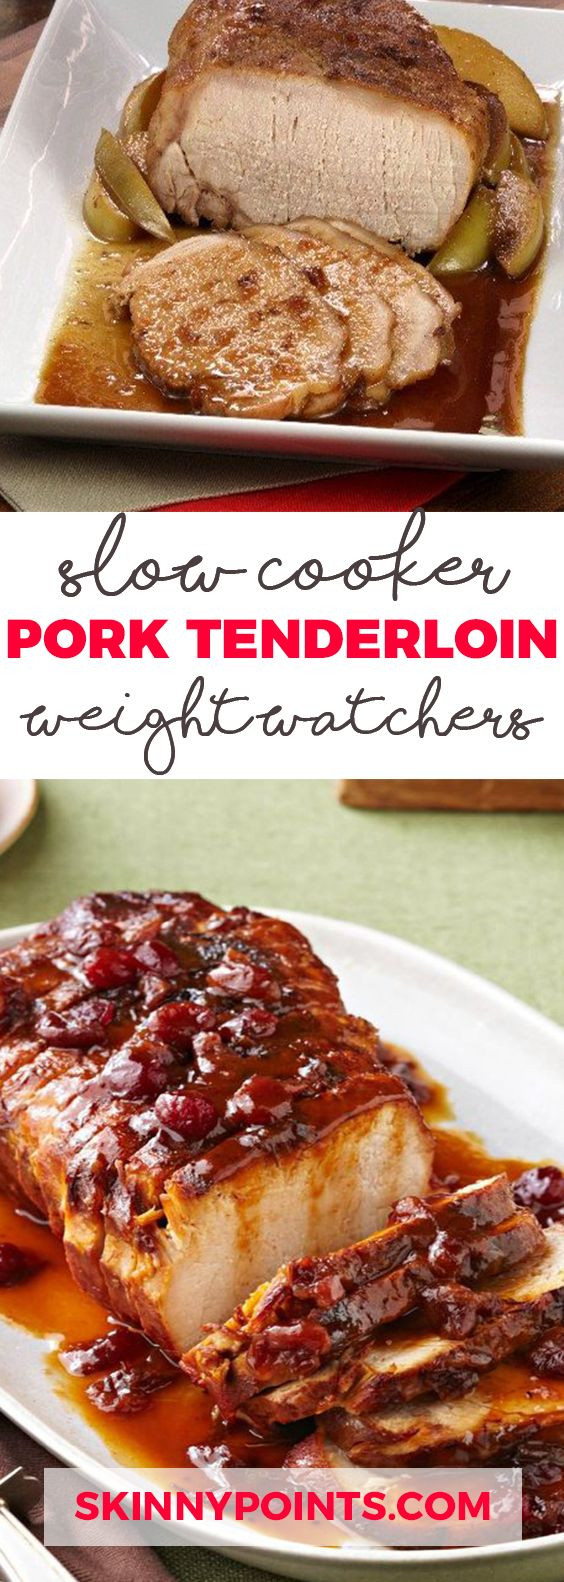 Healthy Pork Tenderloin Recipes Slow Cooker
 Best 25 Healthy pork tenderloin recipes ideas on